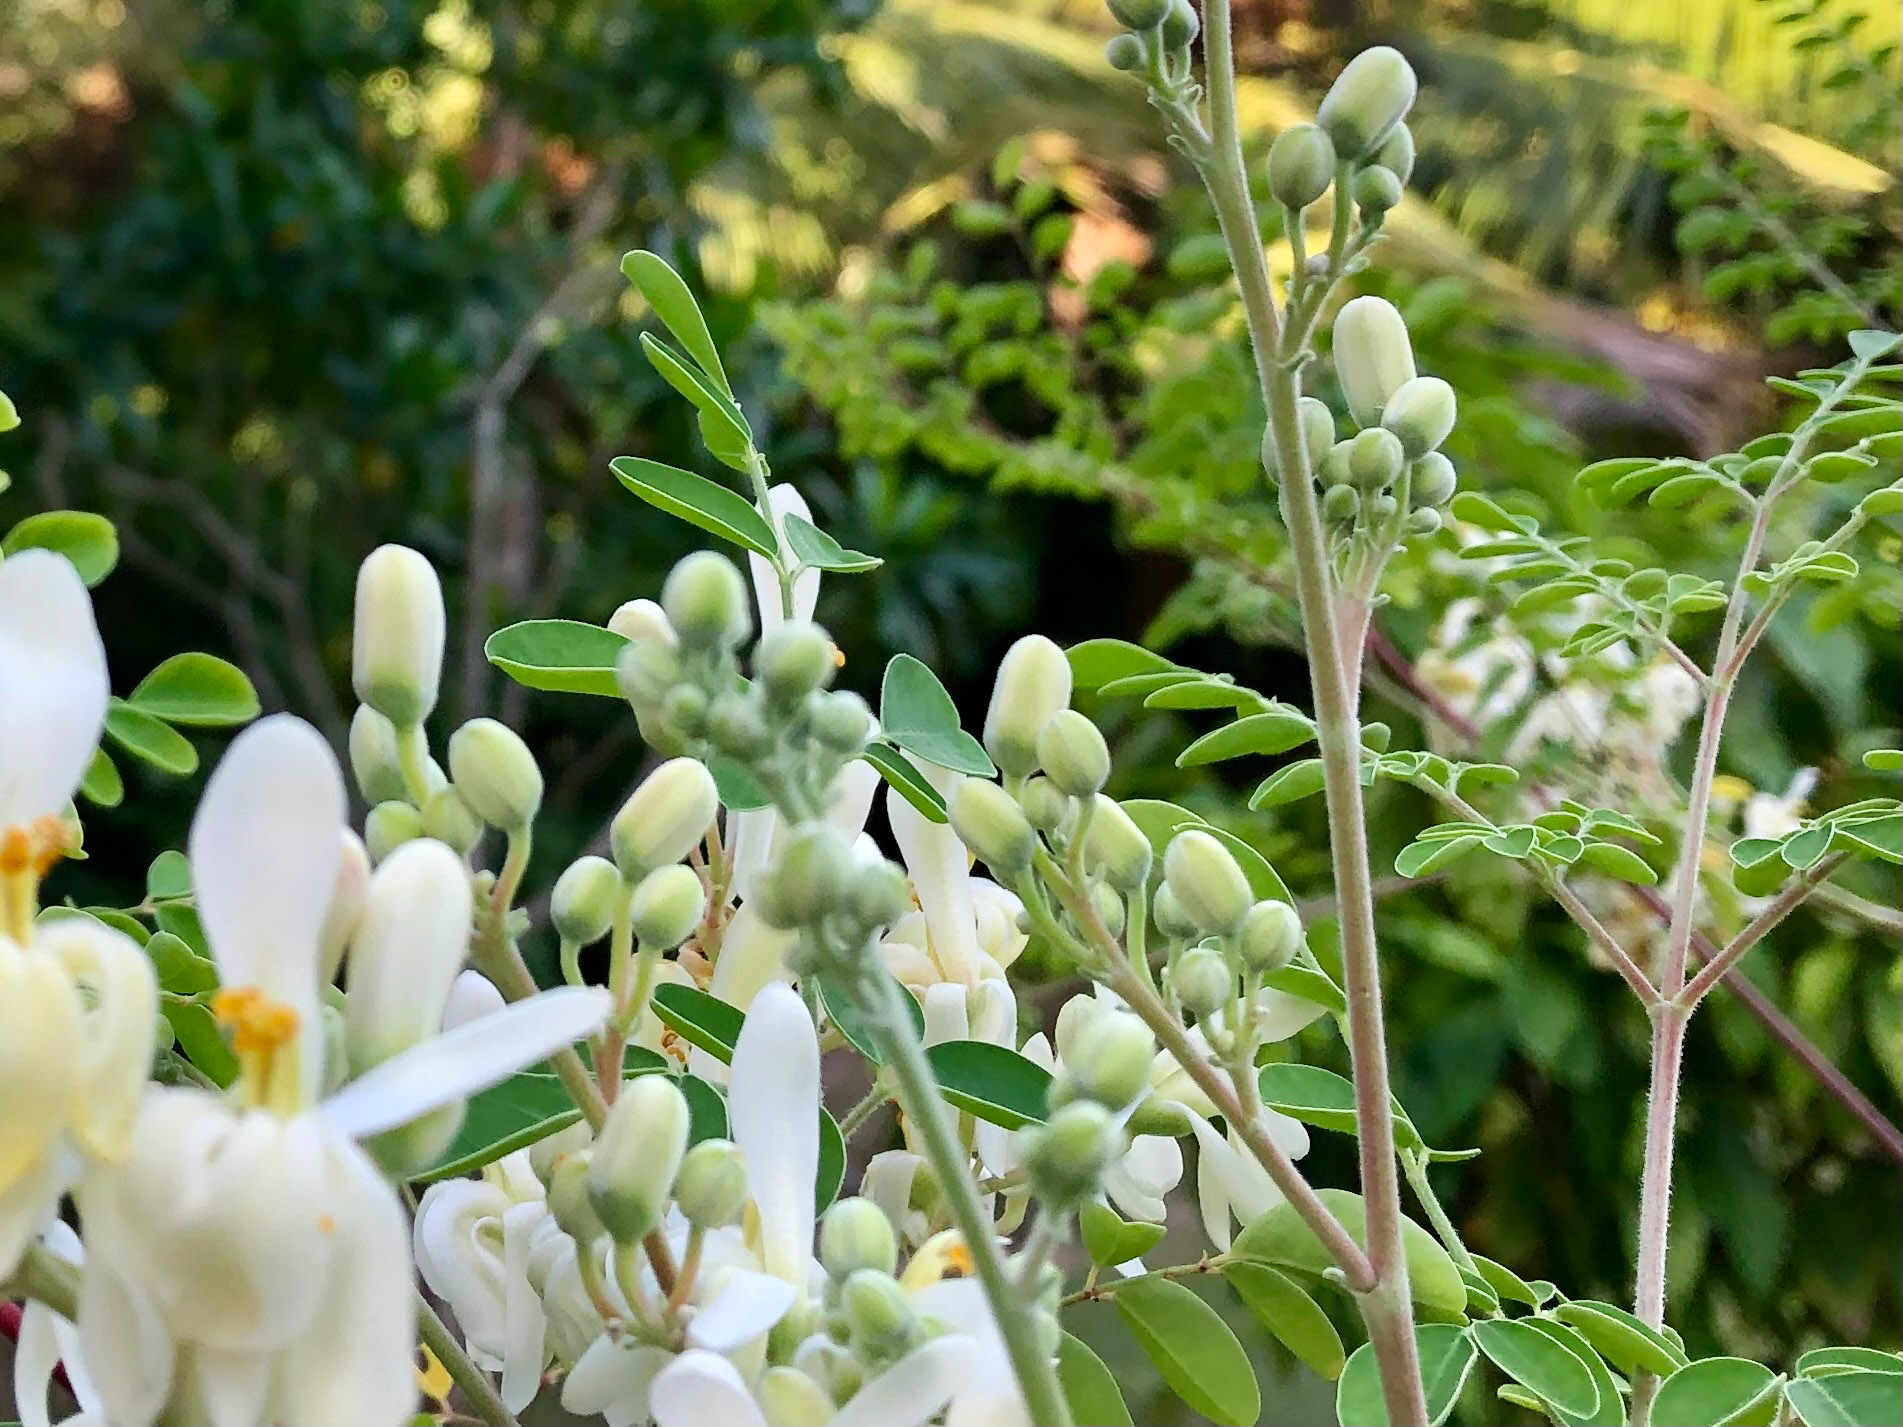 Moringa flowers in the garden of Bois d'Amour